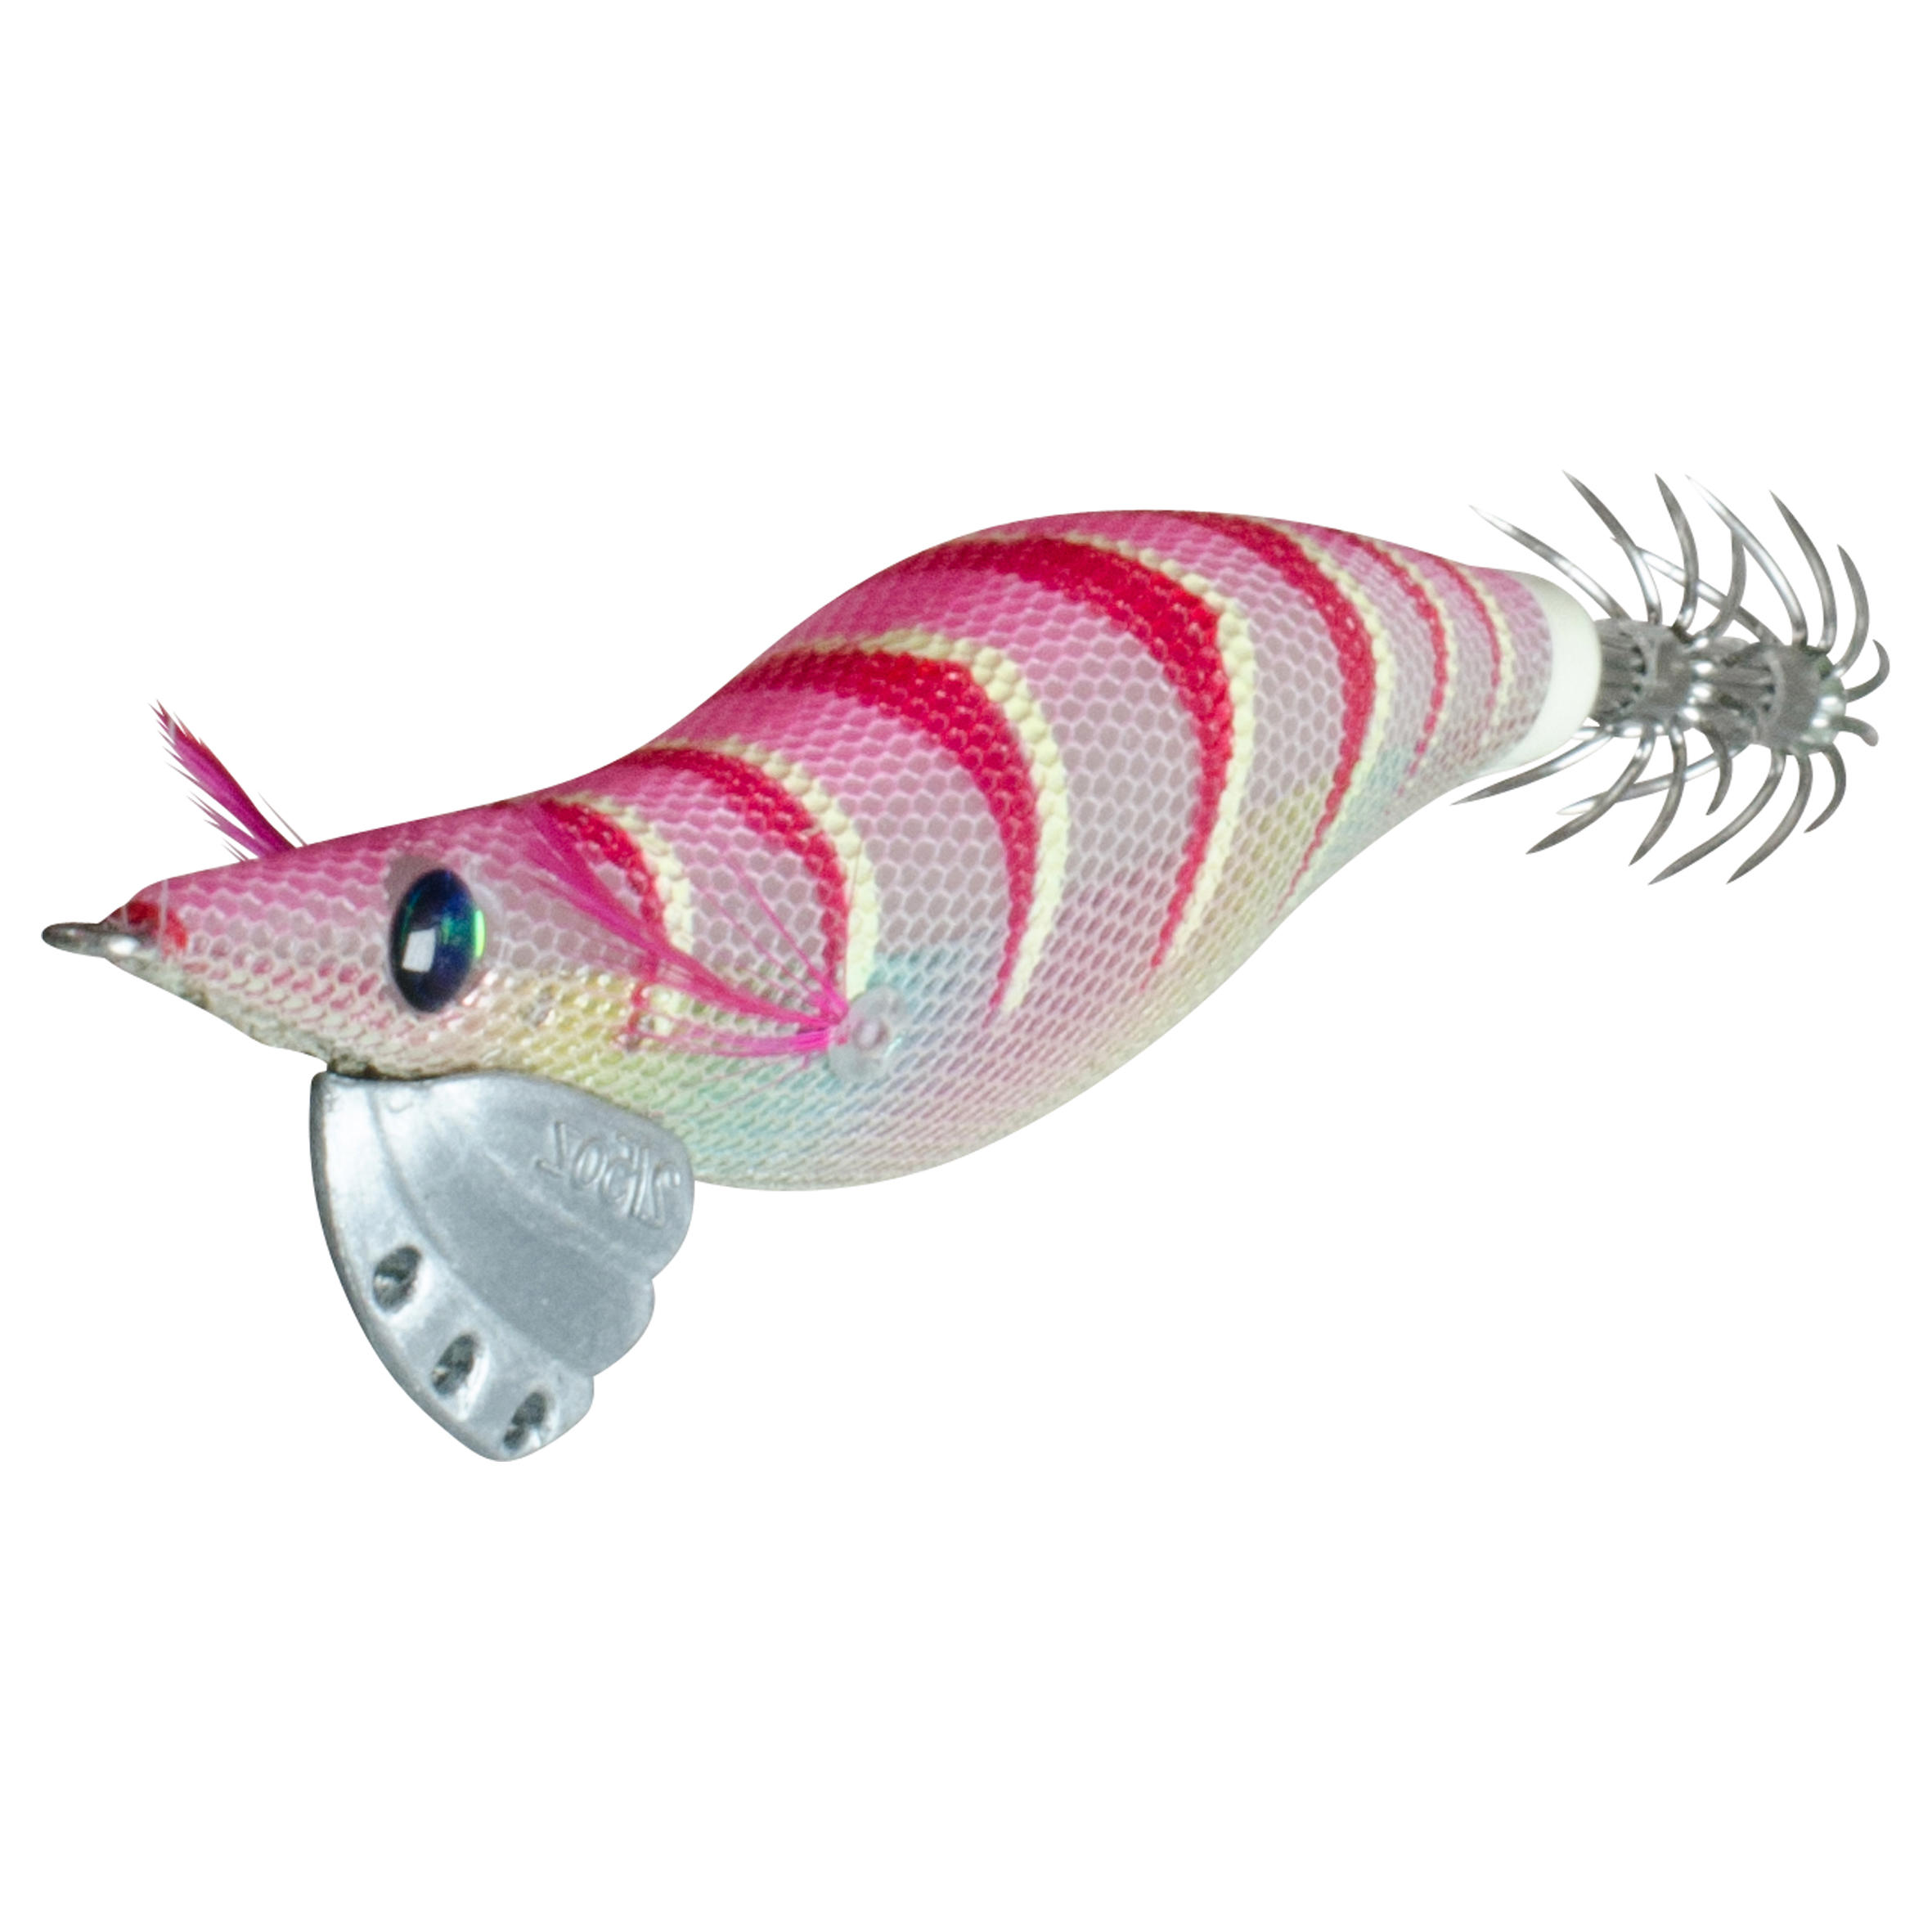 EBIKA squid jig 2.5 pink cuttlefish/squid fishing 2/6